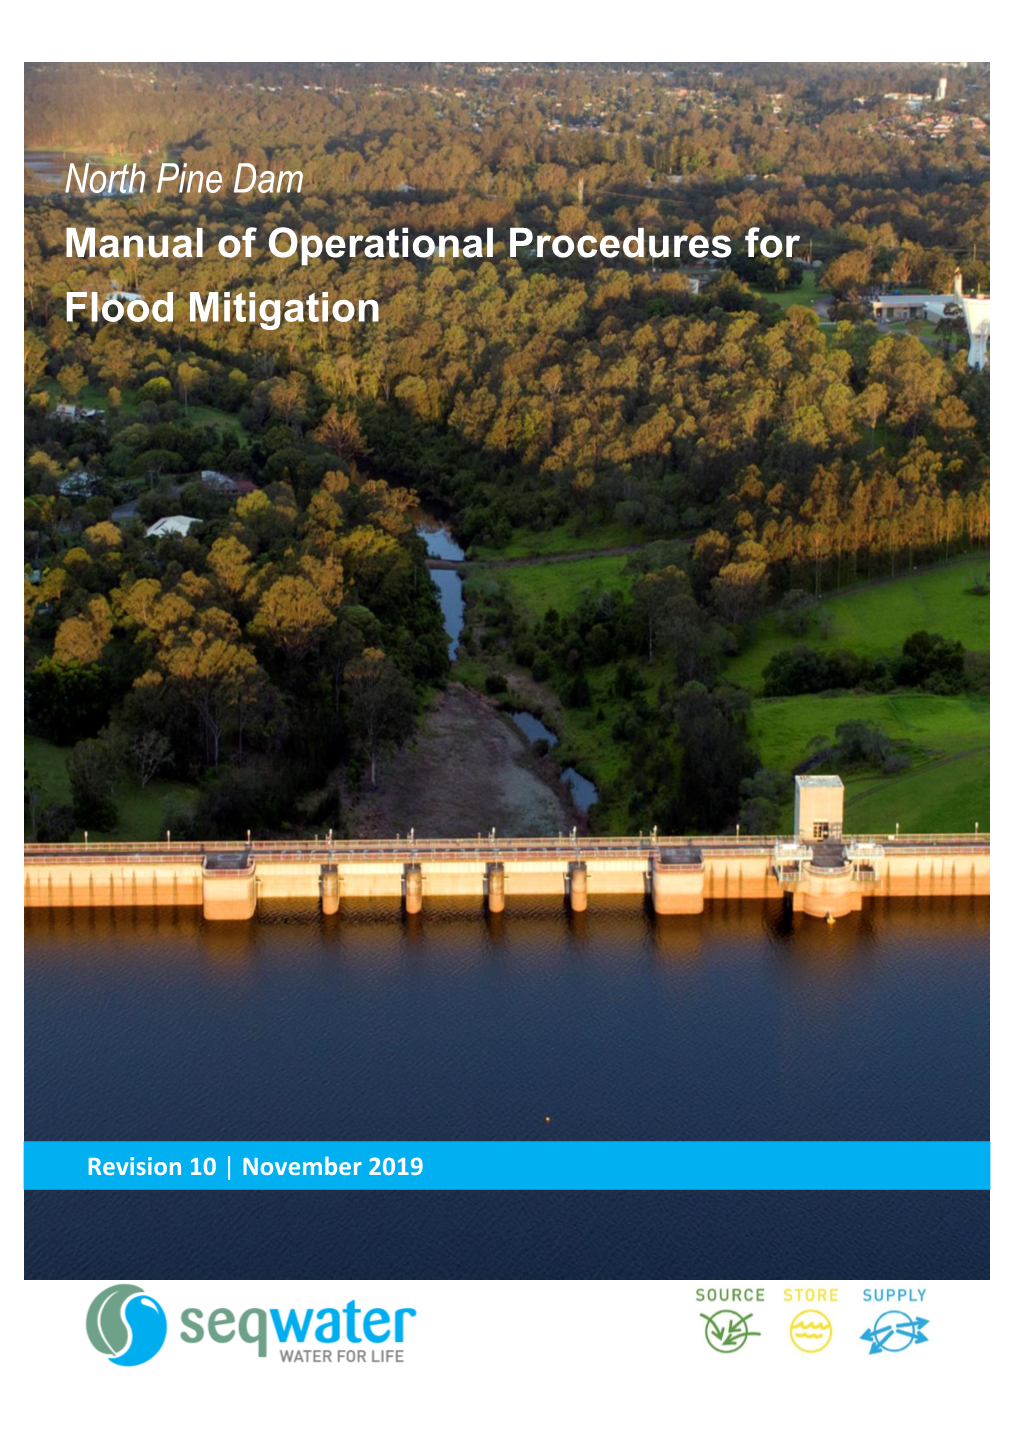 North Pine Dam Manual of Operational Procedures